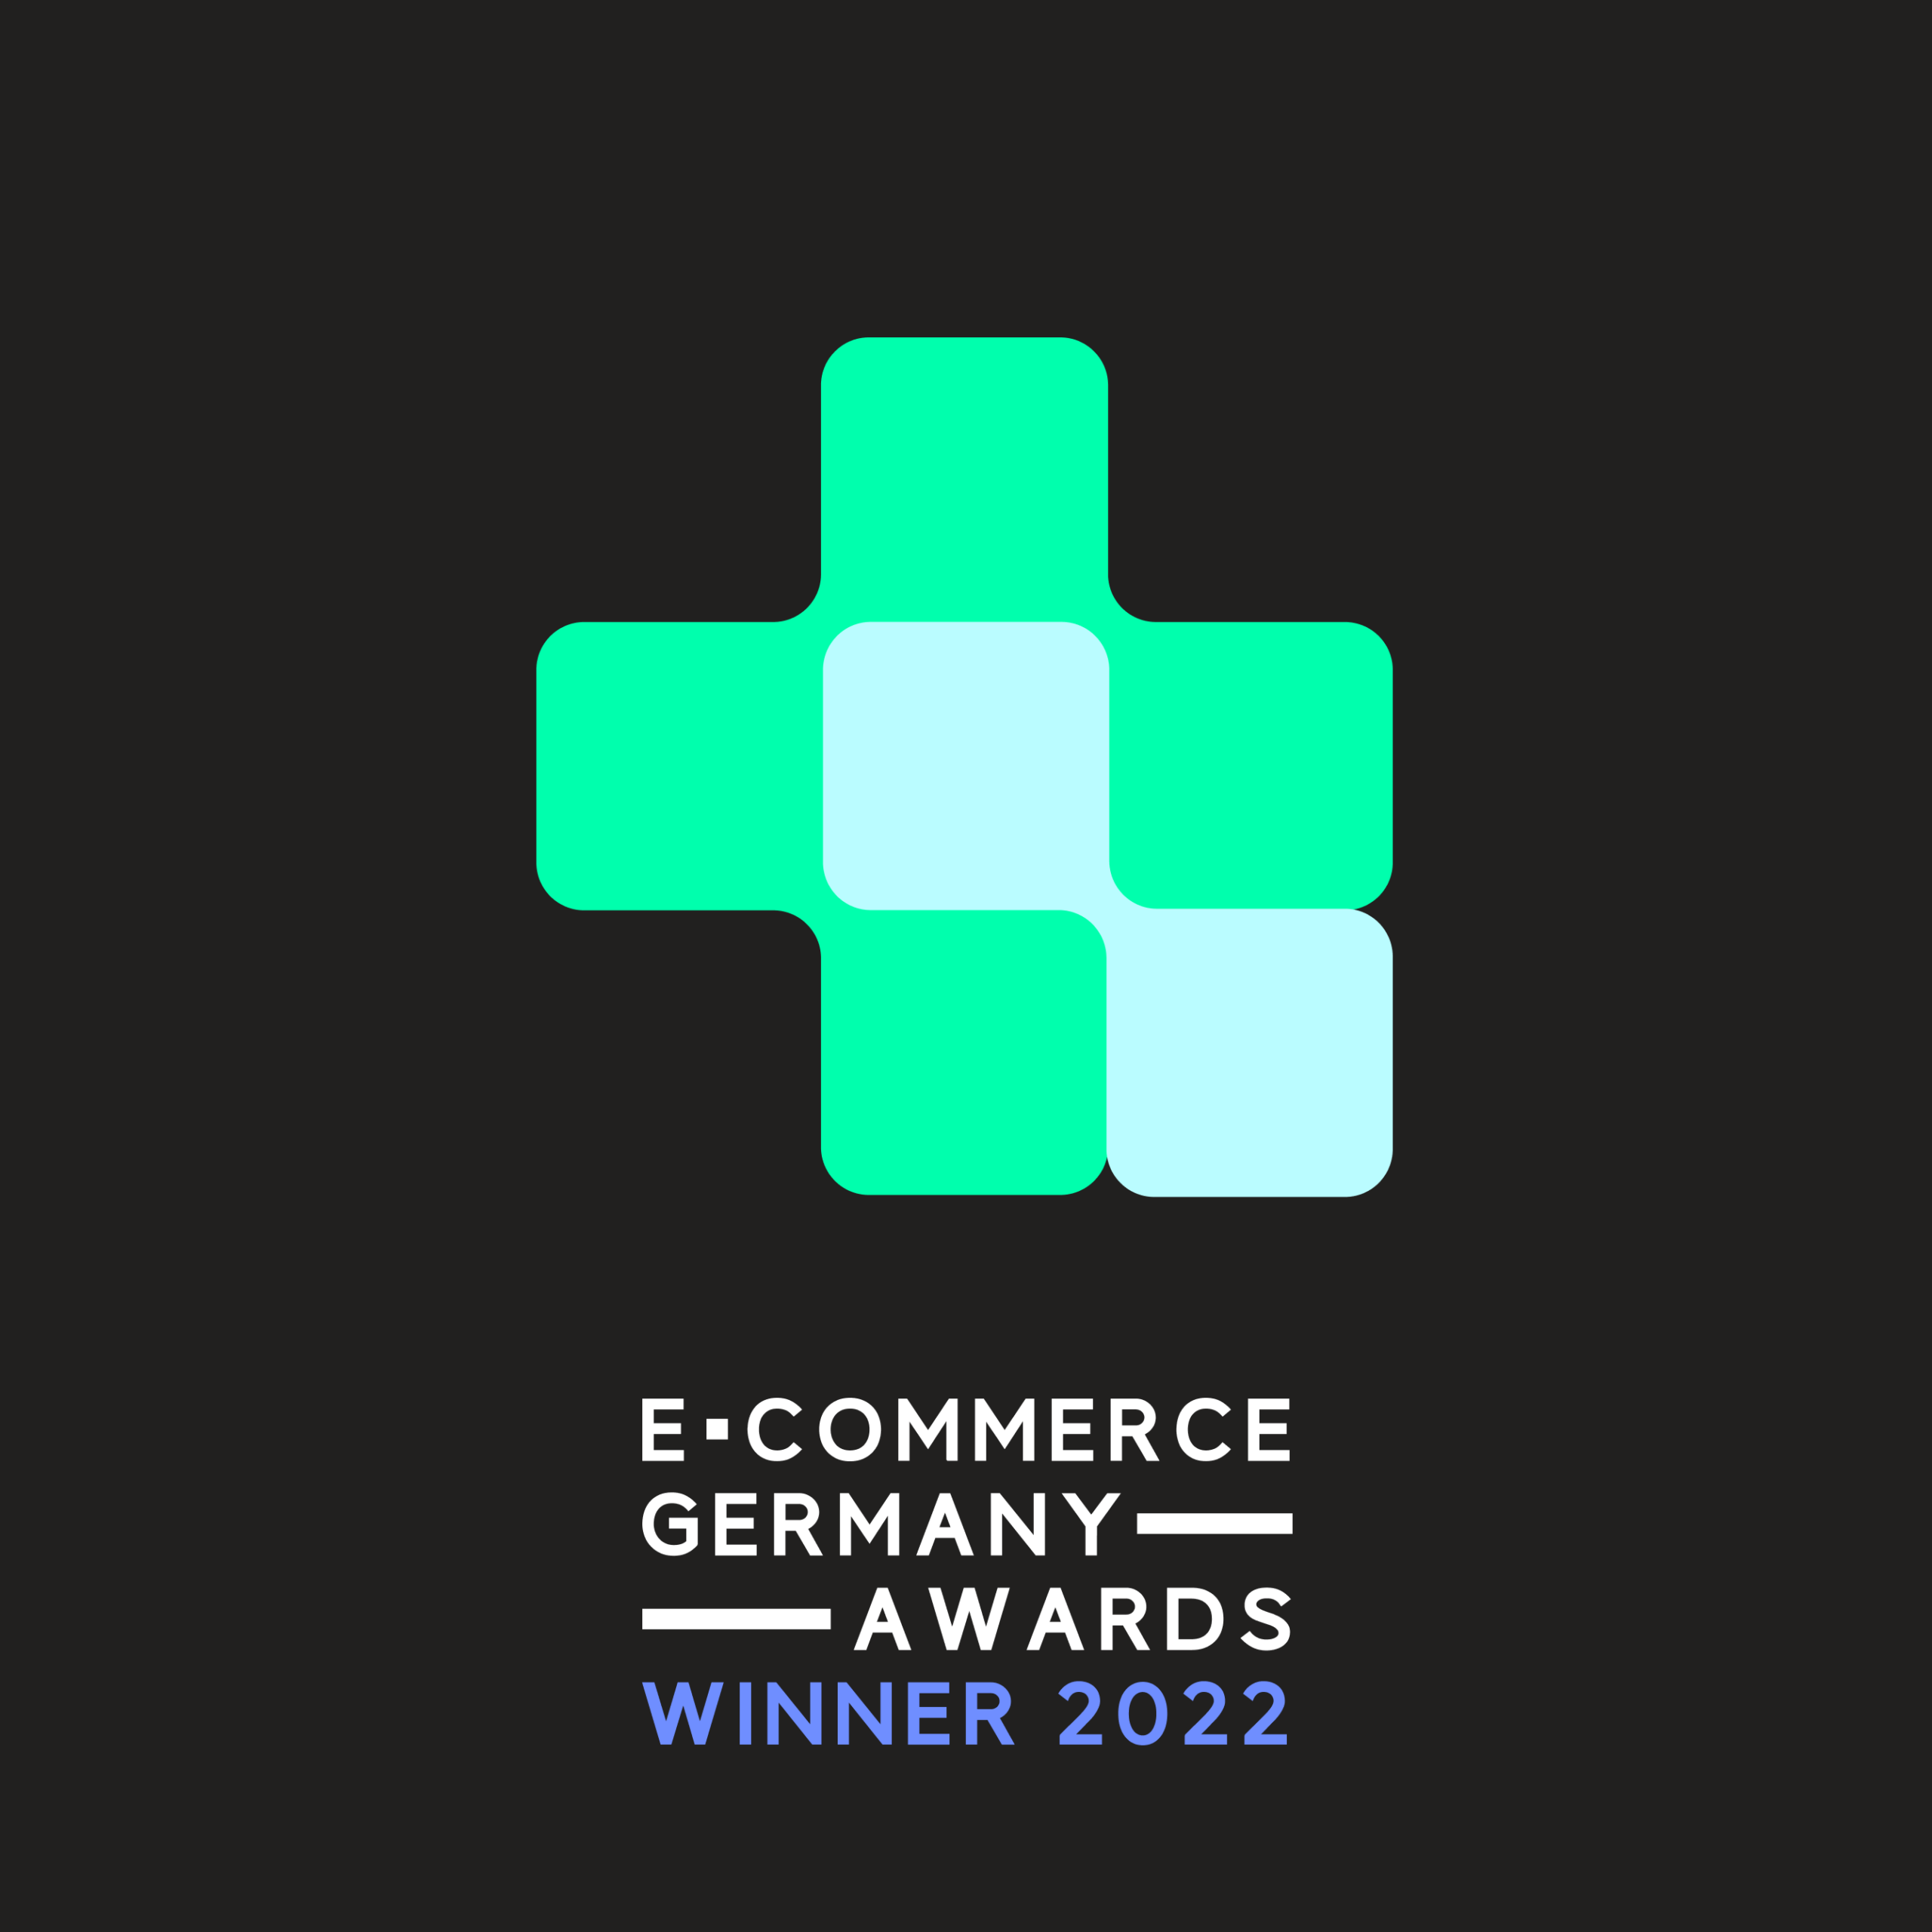 eCommerce fulfillment awards Germany EGA 2022 everstox